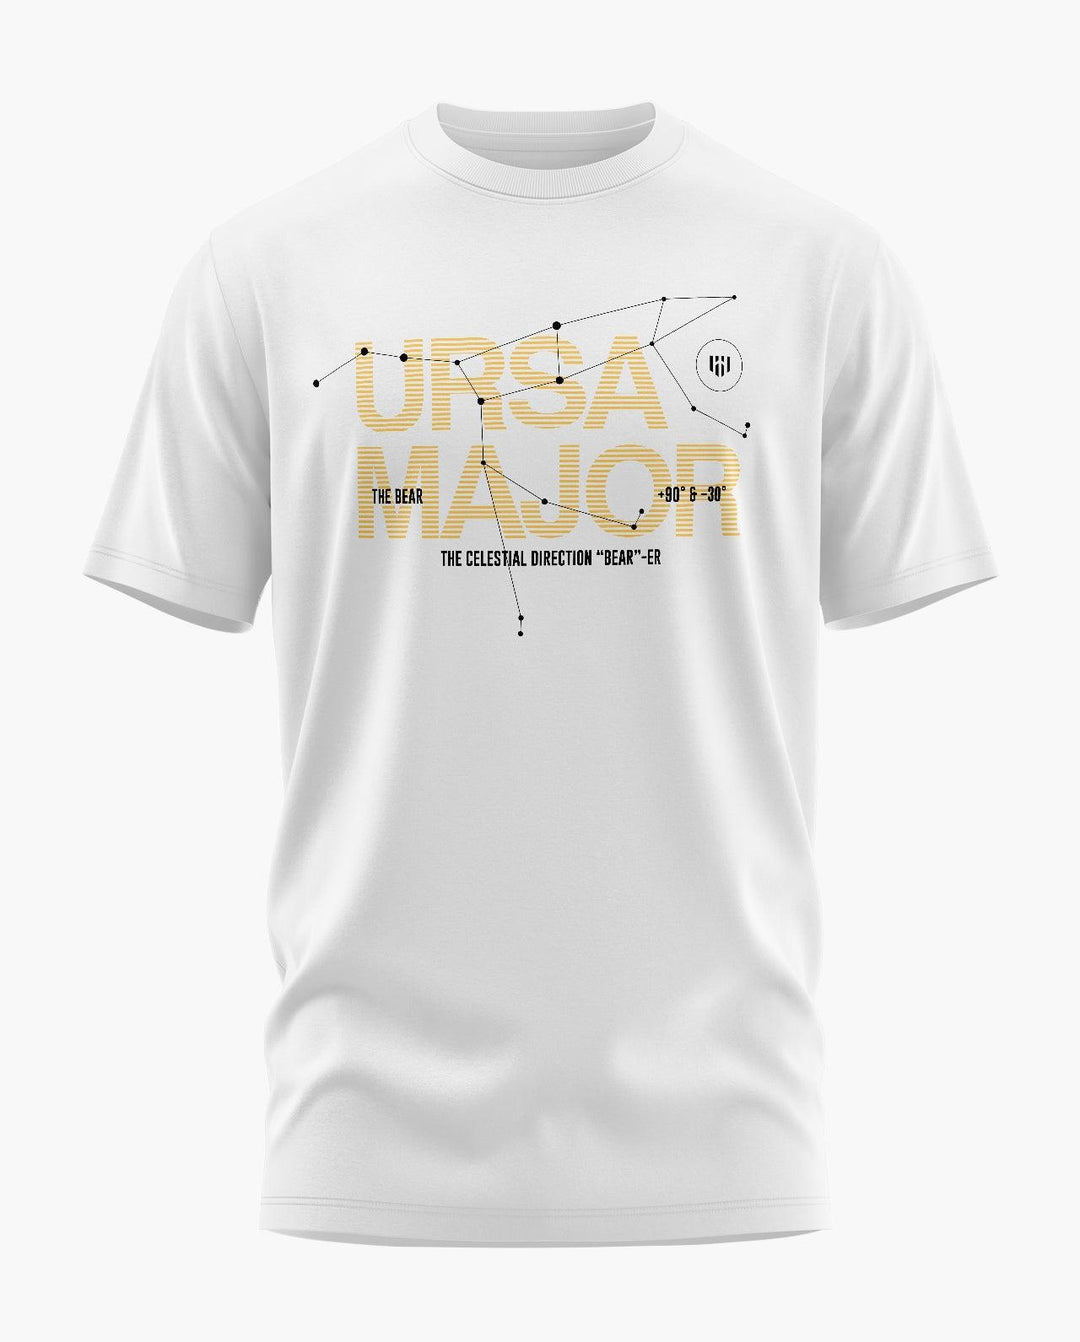 URSA Major Constellation T-Shirt - Aero Armour